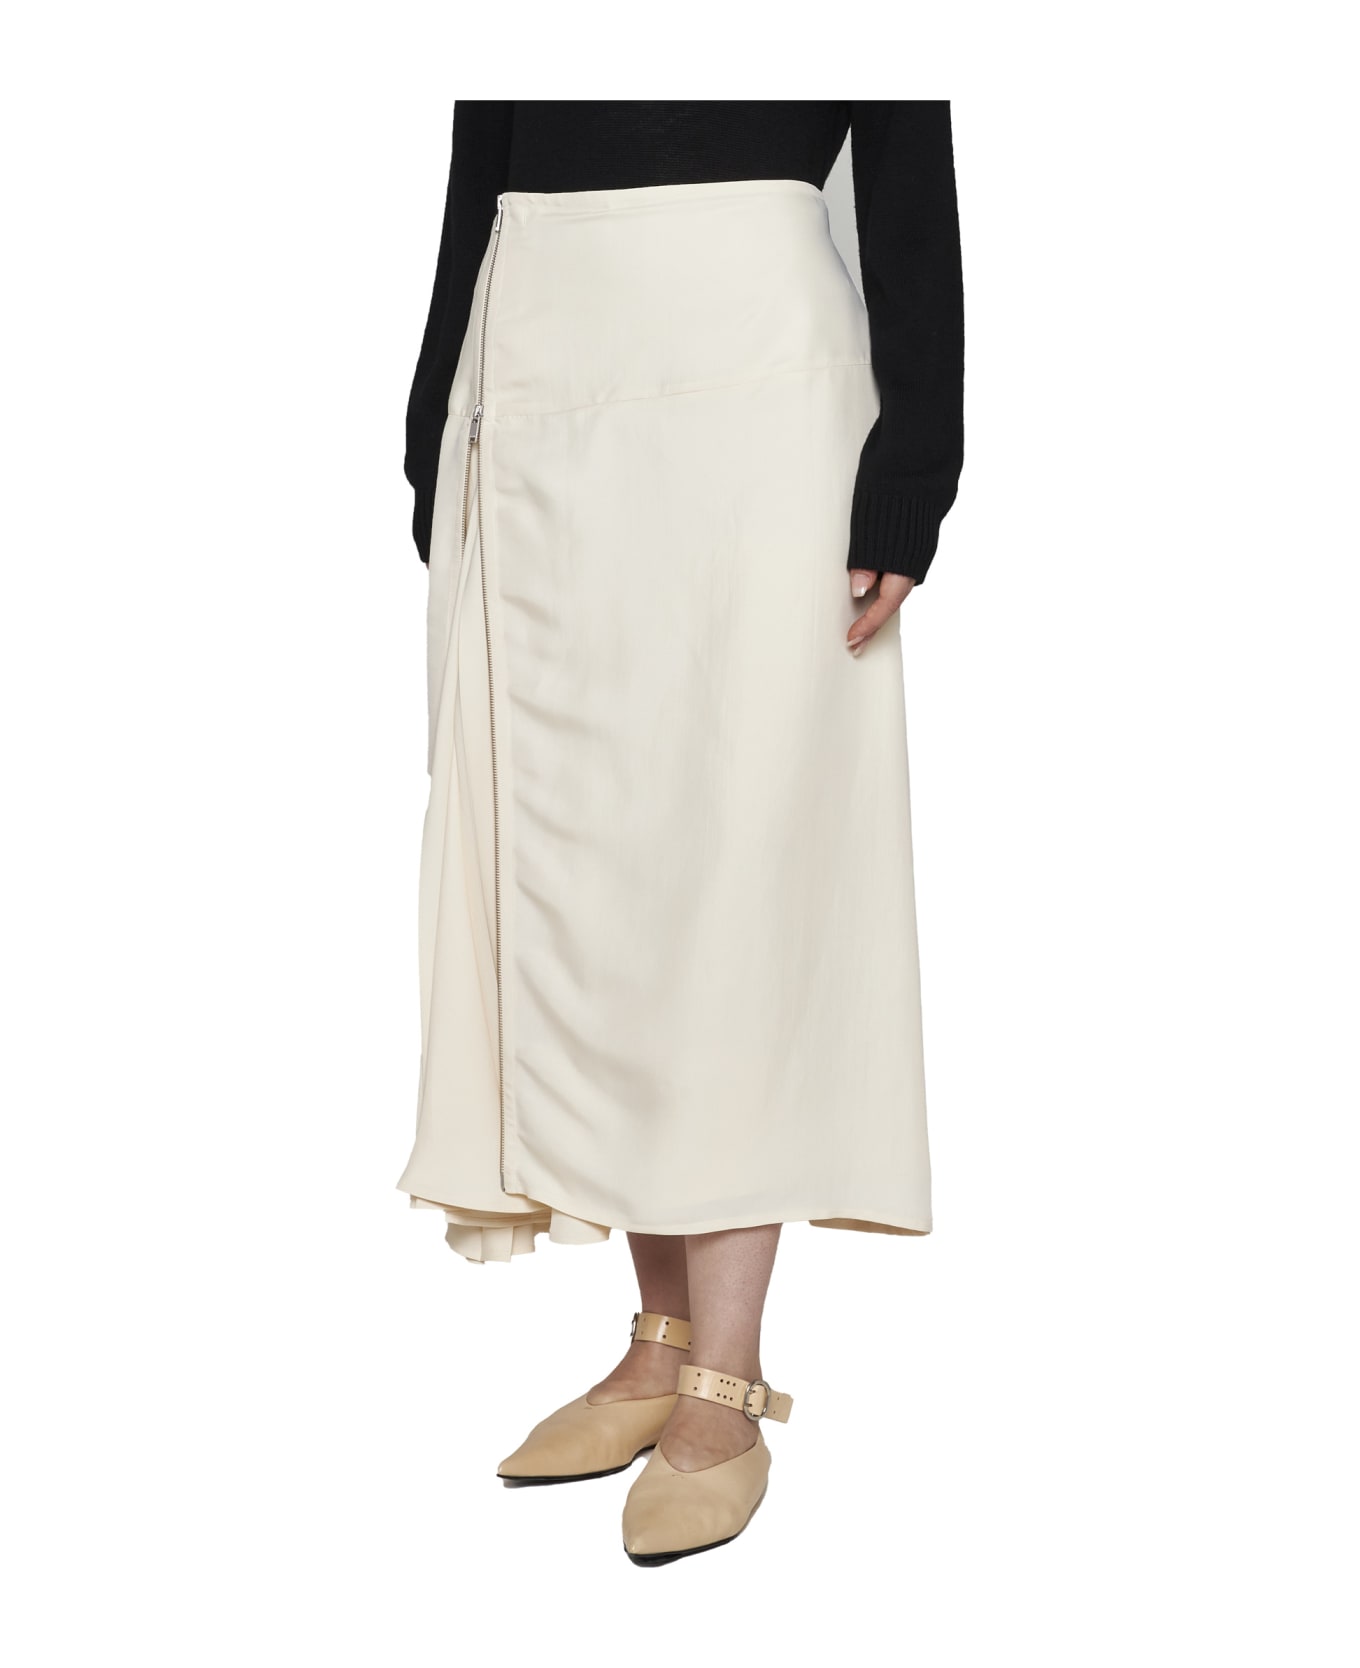 Jil Sander Skirt - White candle スカート